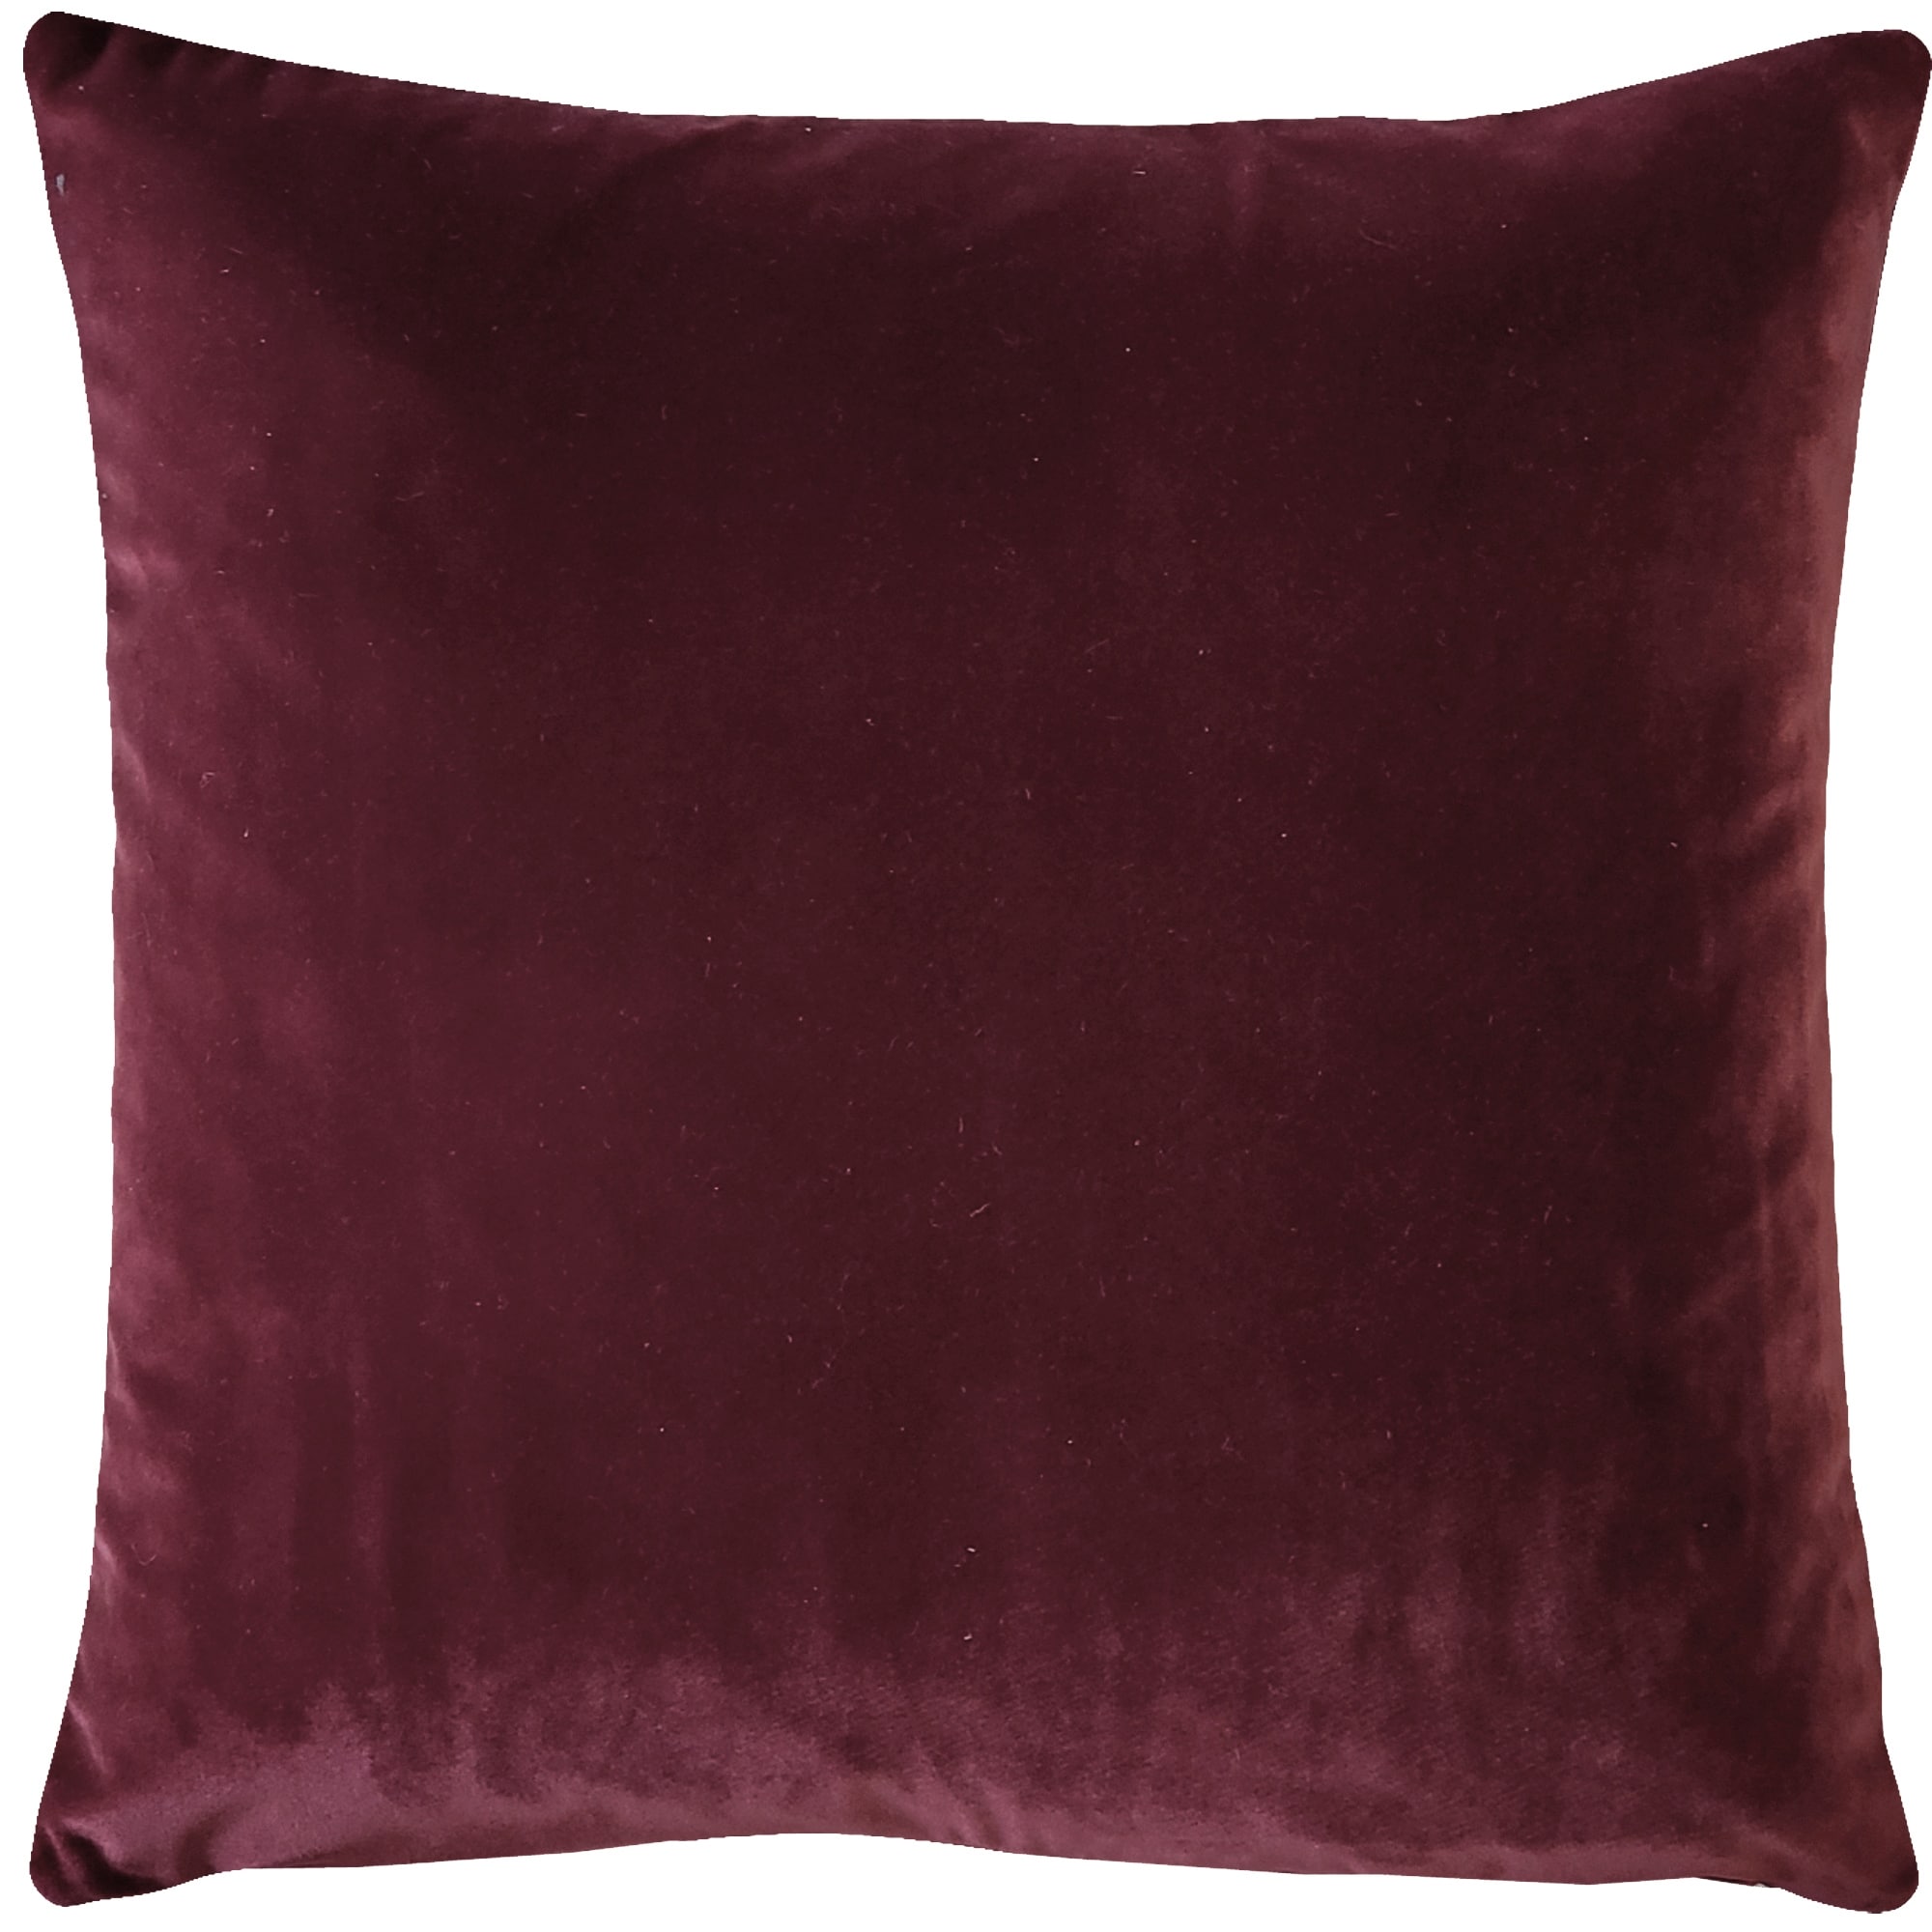 https://ak1.ostkcdn.com/images/products/is/images/direct/139454a57e9536d3fd65c363f61e95f4cd08621a/Pillow-Decor-Castello-Soft-Velvet-Throw-Pillows-%283-Sizes%2C-18-Colors%29.jpg